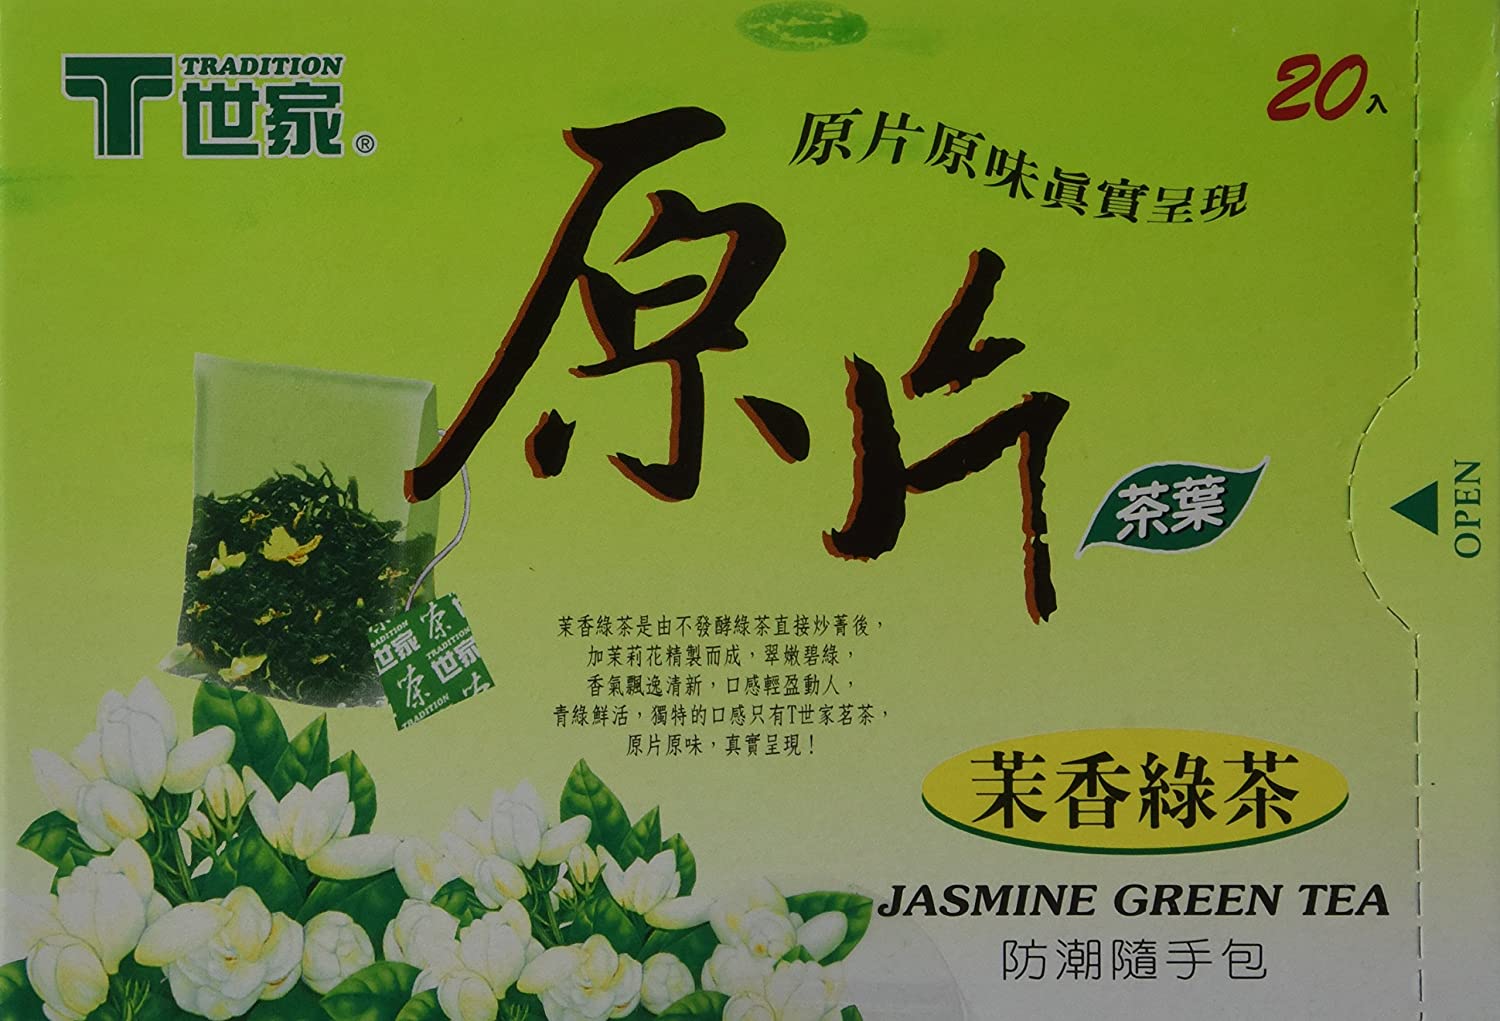 TRADITION JASMINE GREEN TEA